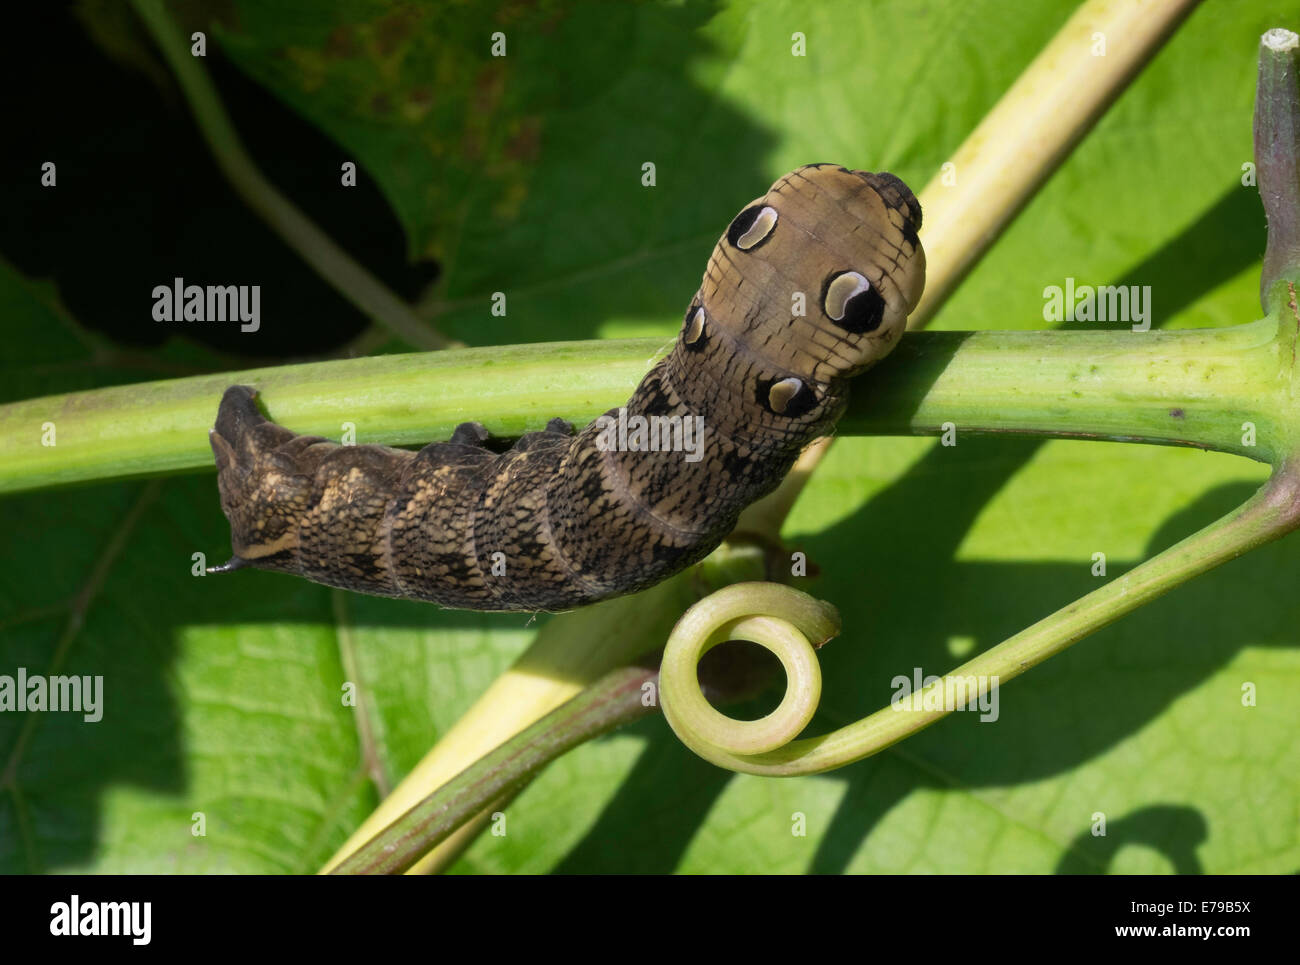 Caterpillar of Elephant Hawkmoth on grapevine in domestic garden England UK showing markings to frighten off predators. Stock Photo